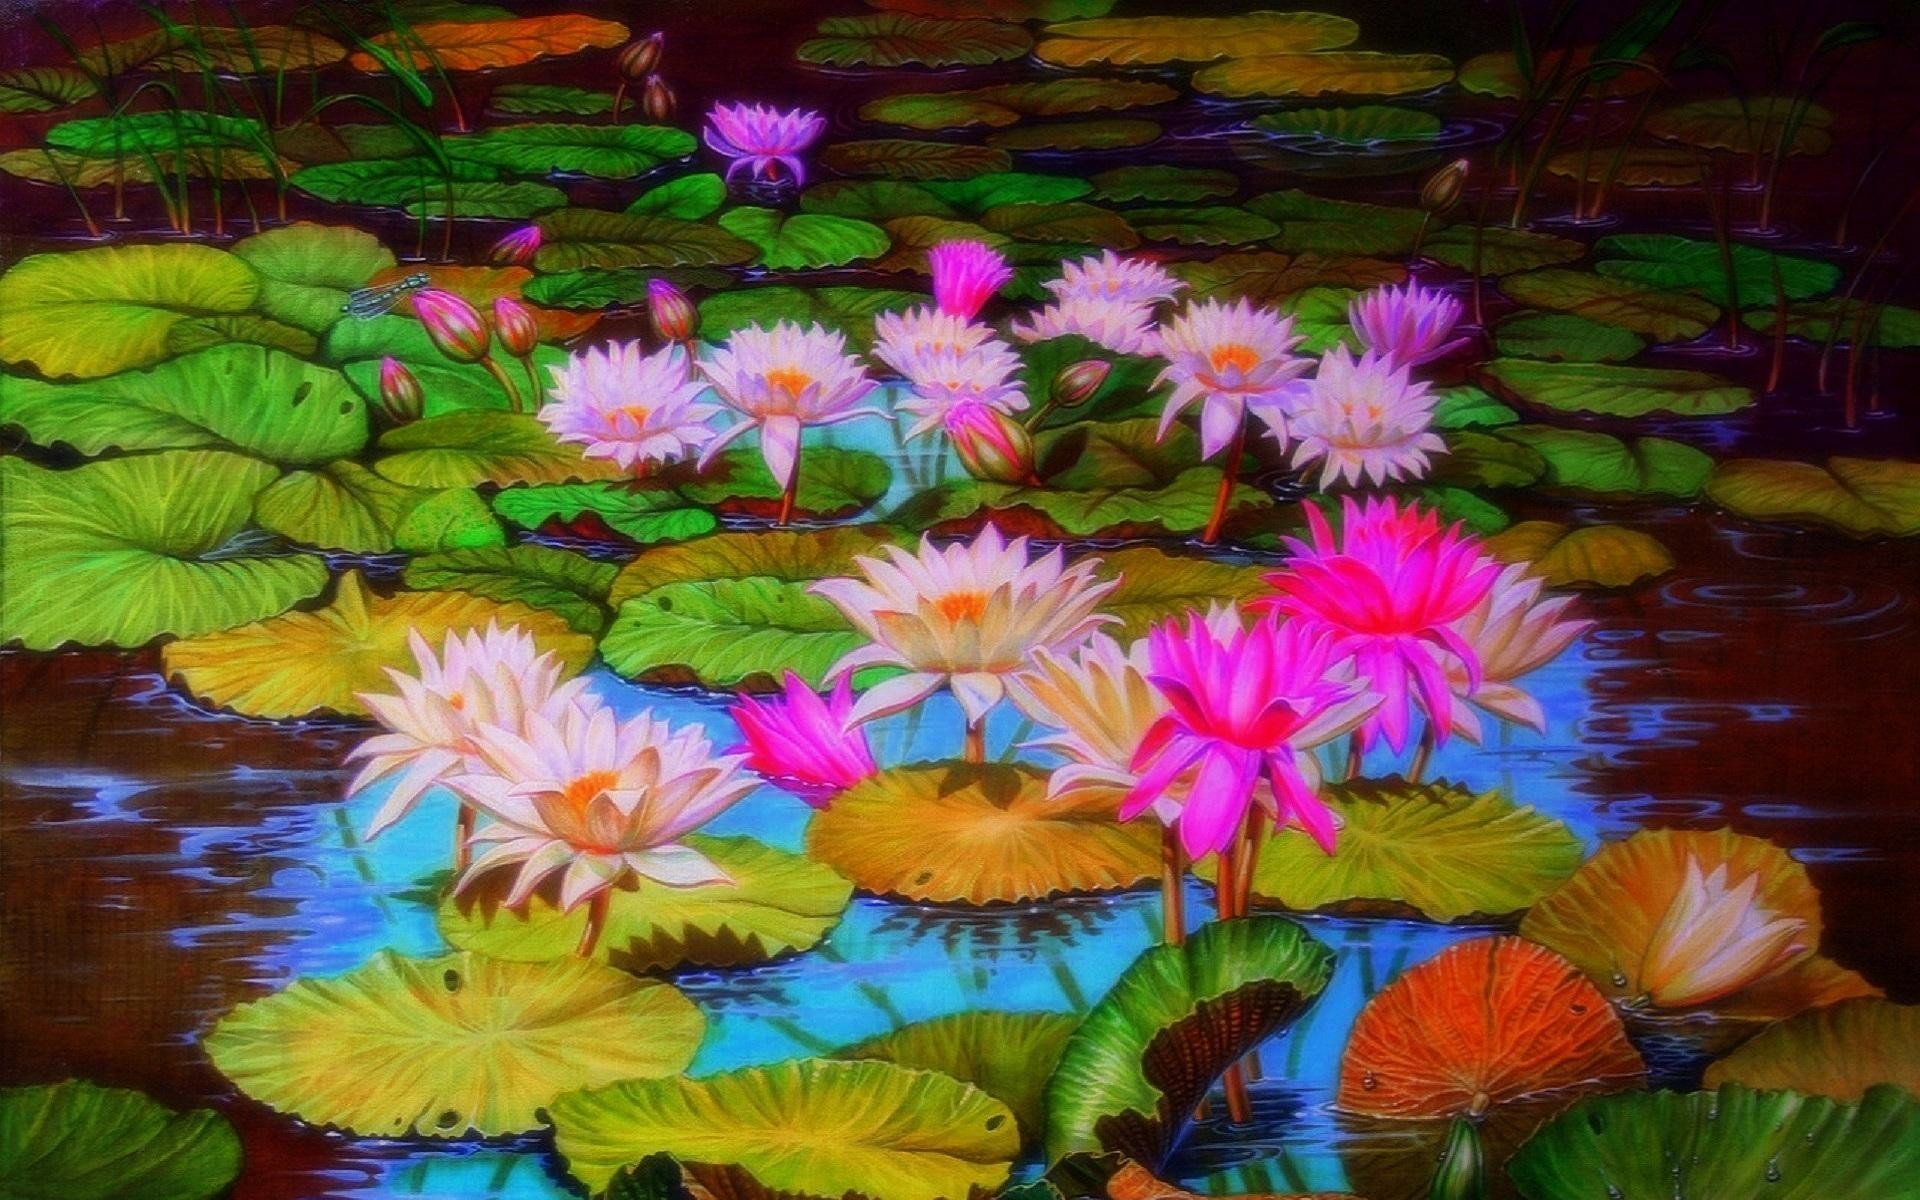 Pond with Lotus Flowers